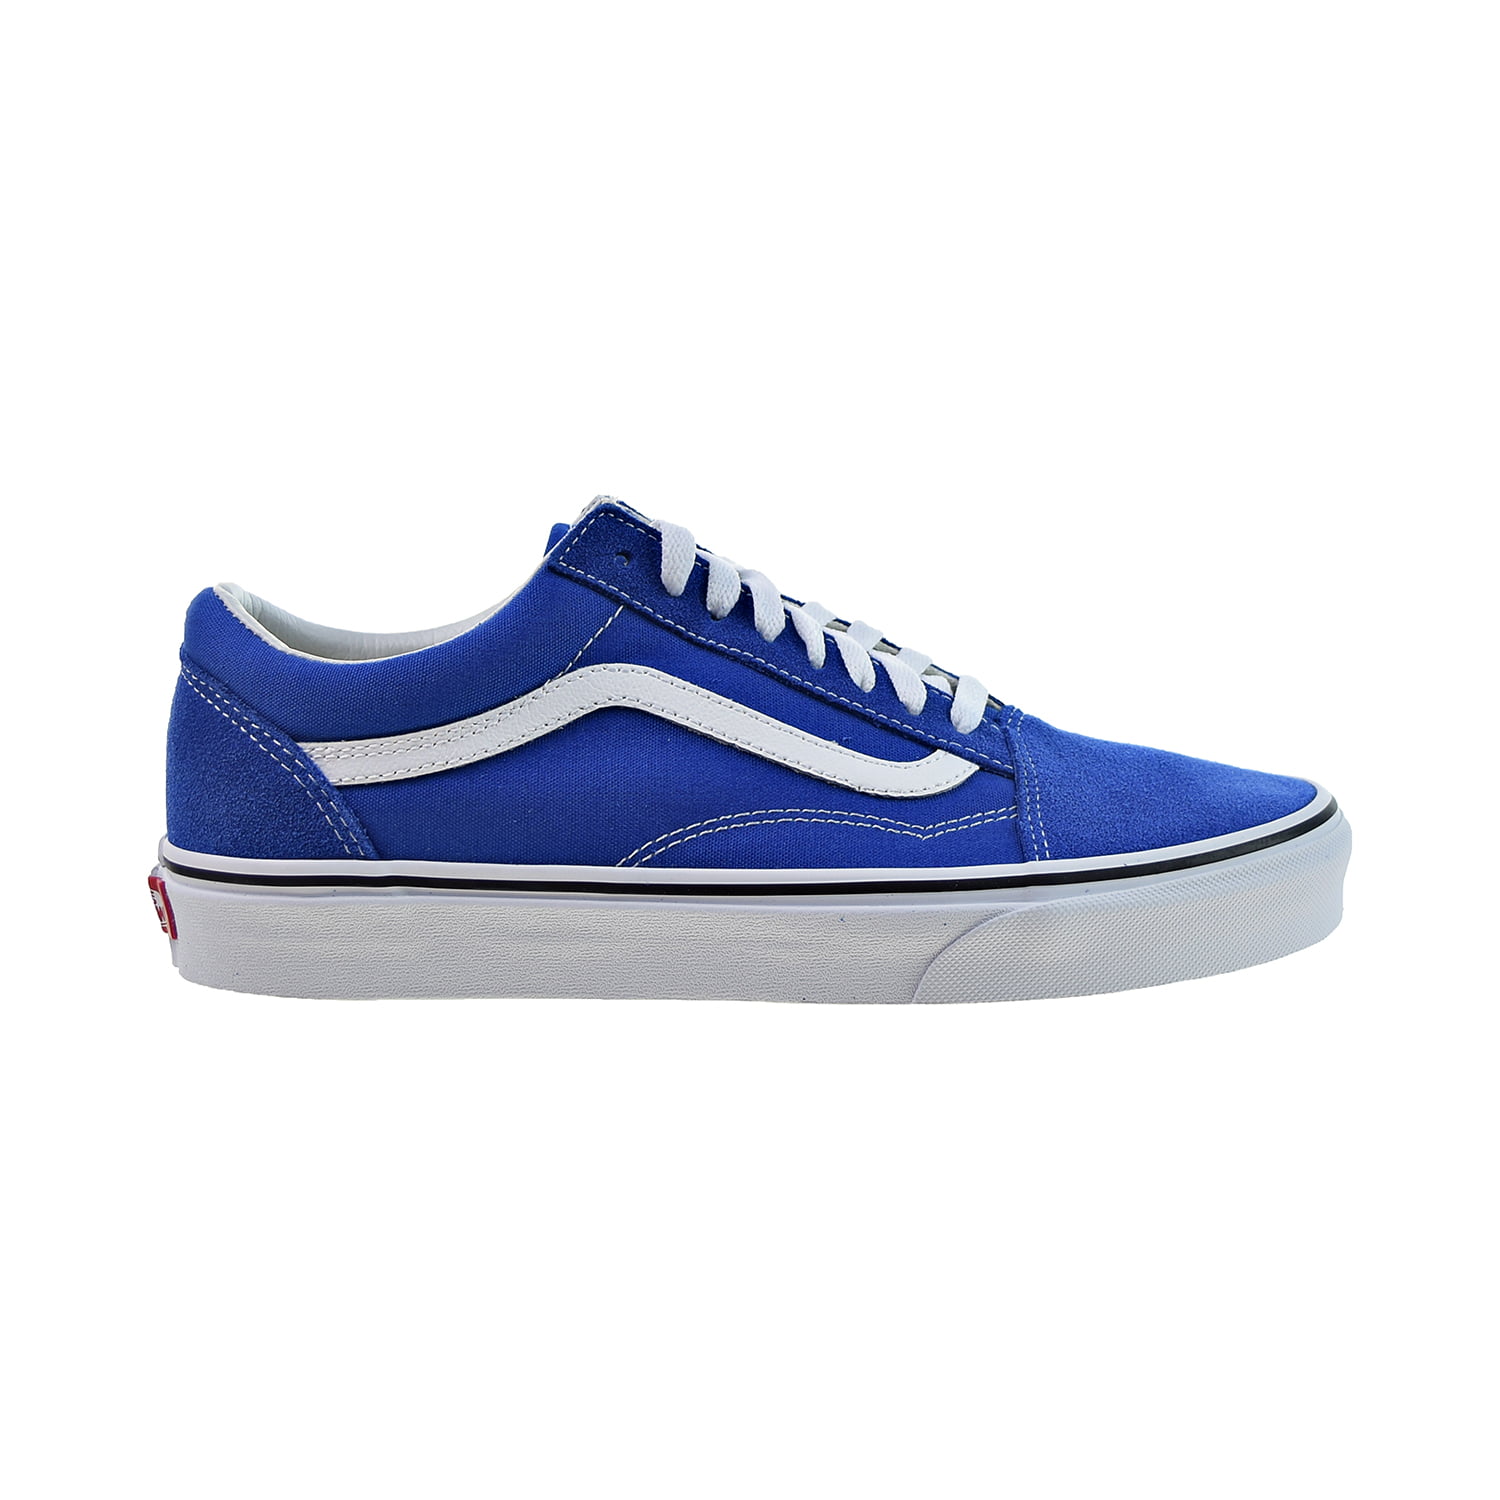 Vans Old Skool Men's Shoes Lapis Blue-True White vn0a38g1-vji - Walmart.com